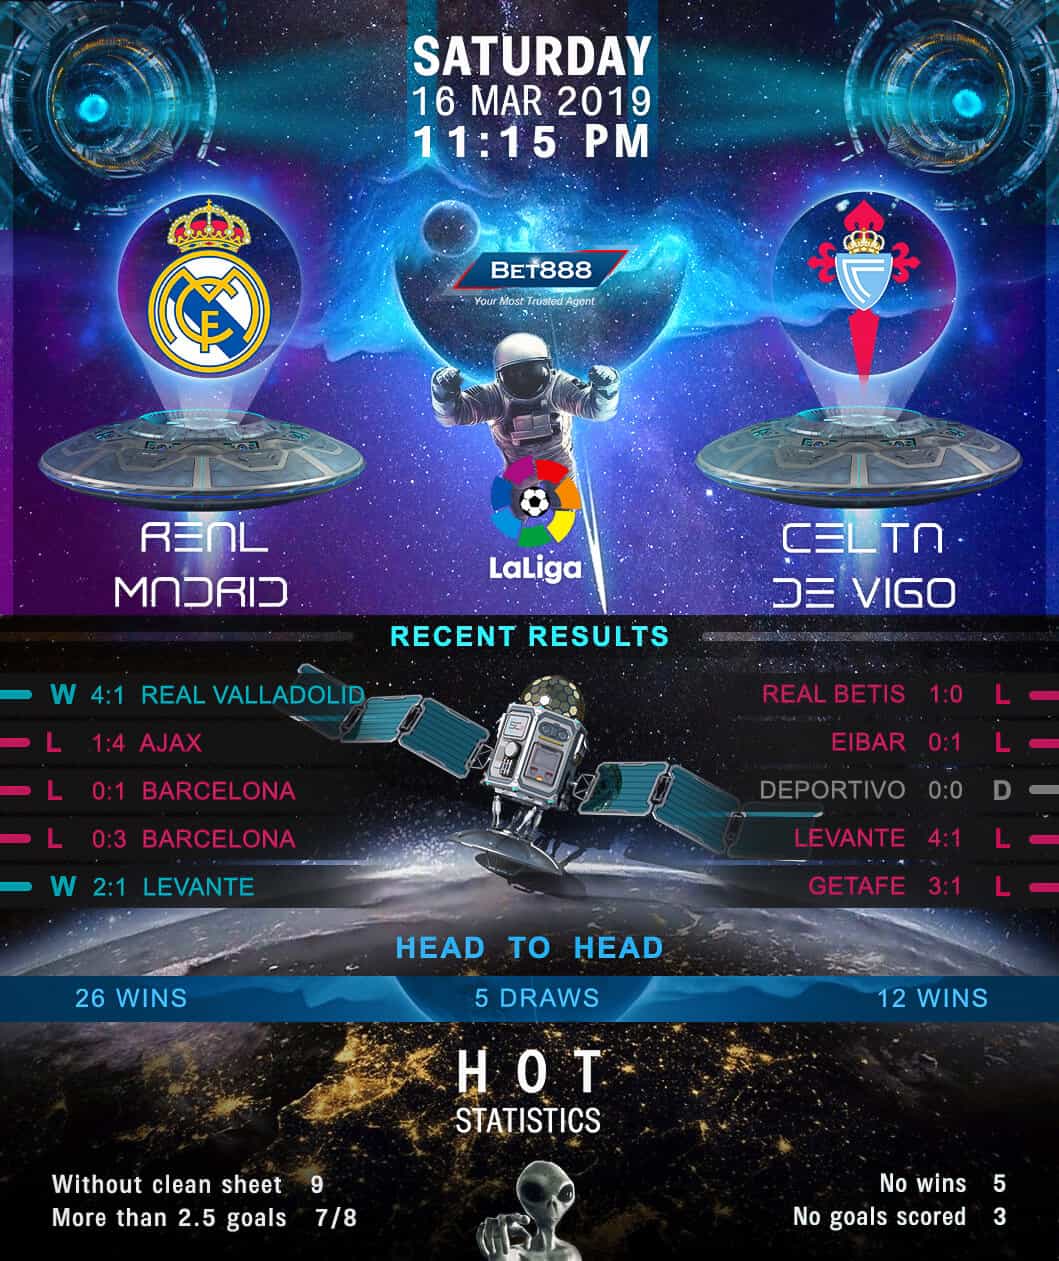 Real Madrid vs Celta Vigo 16/03/19